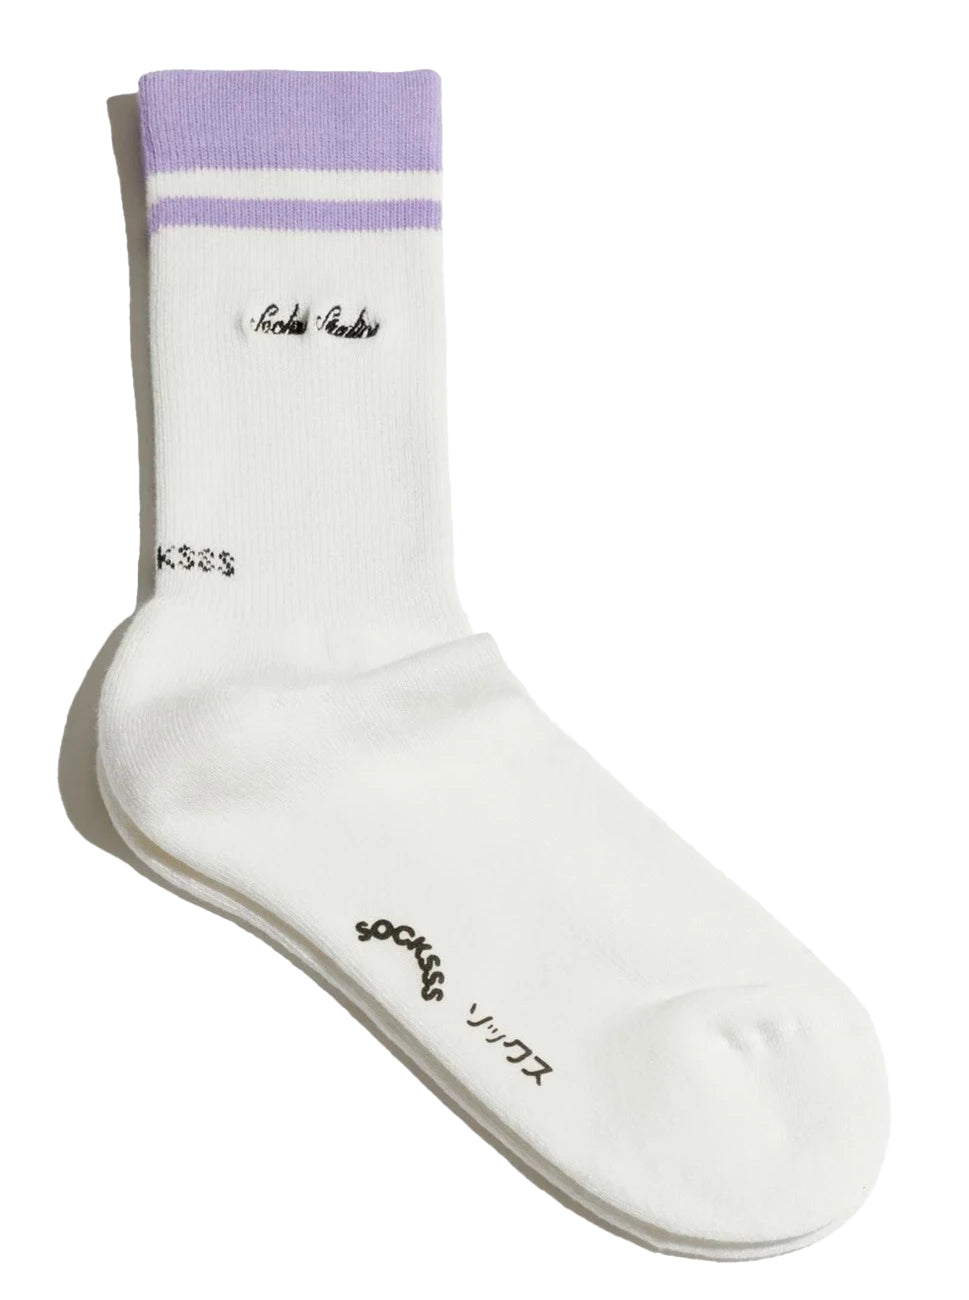 Frampton socks